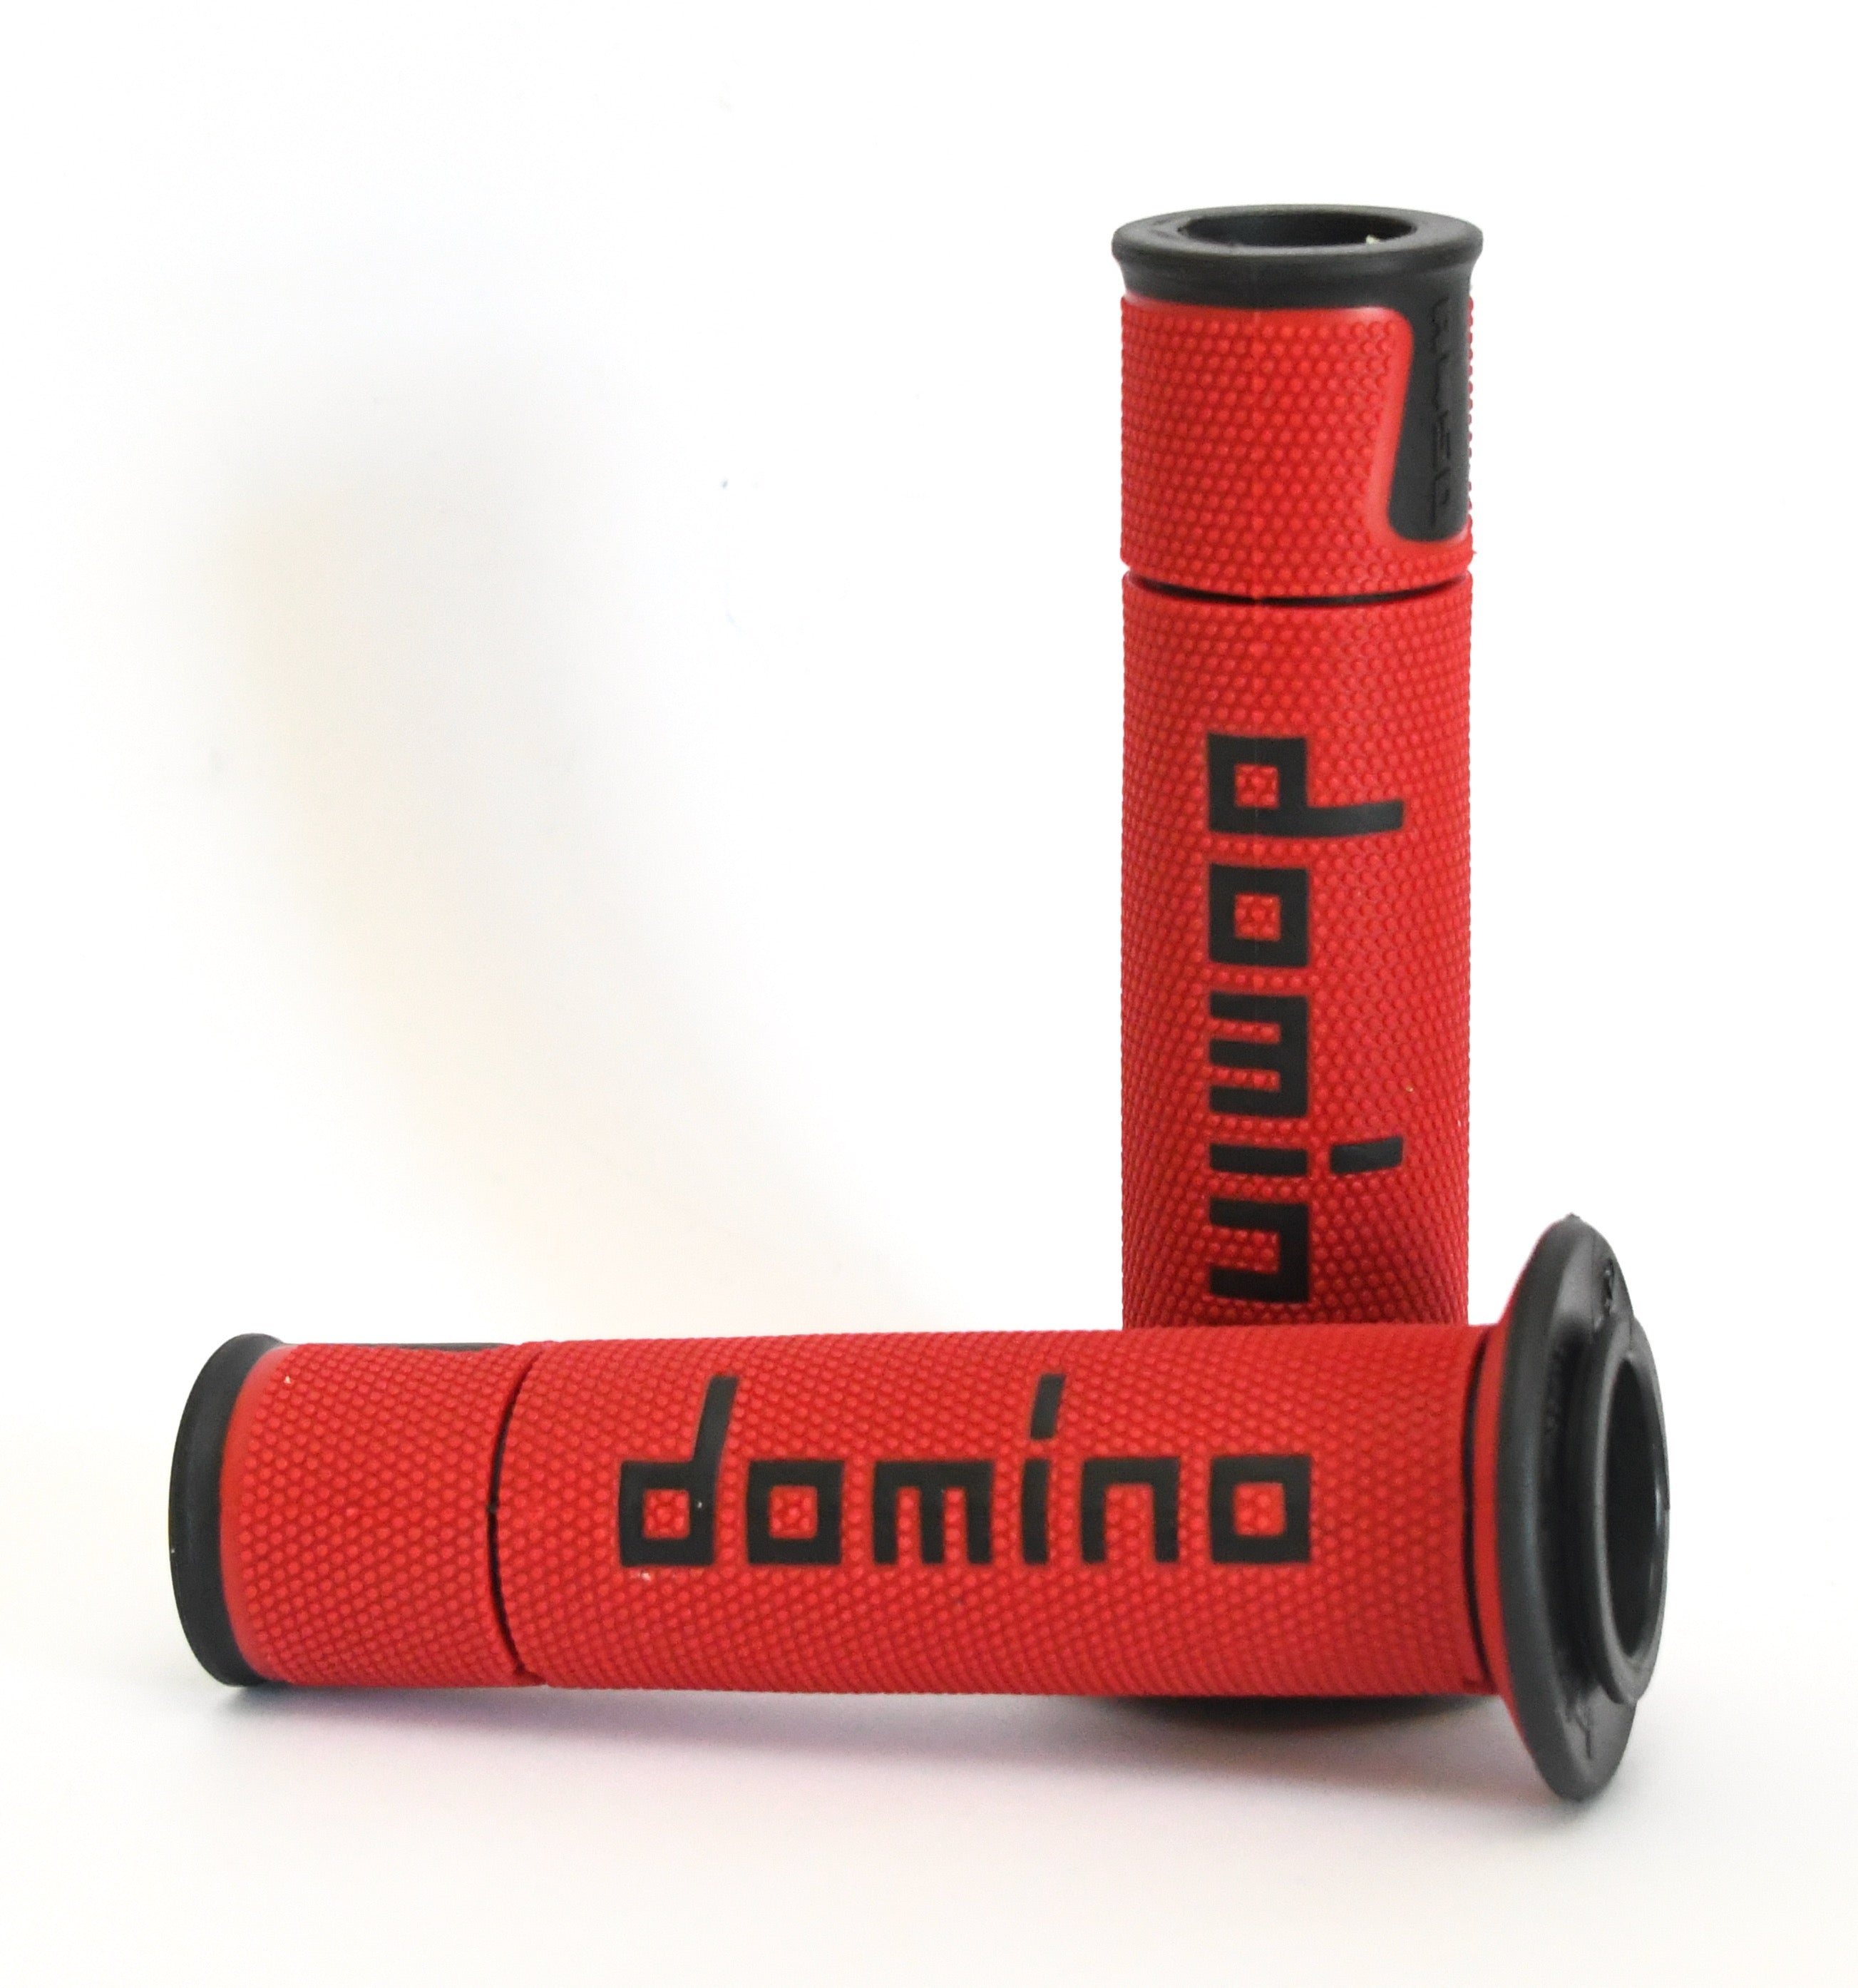 Domino A450 Road Racing grips - Medium Soft